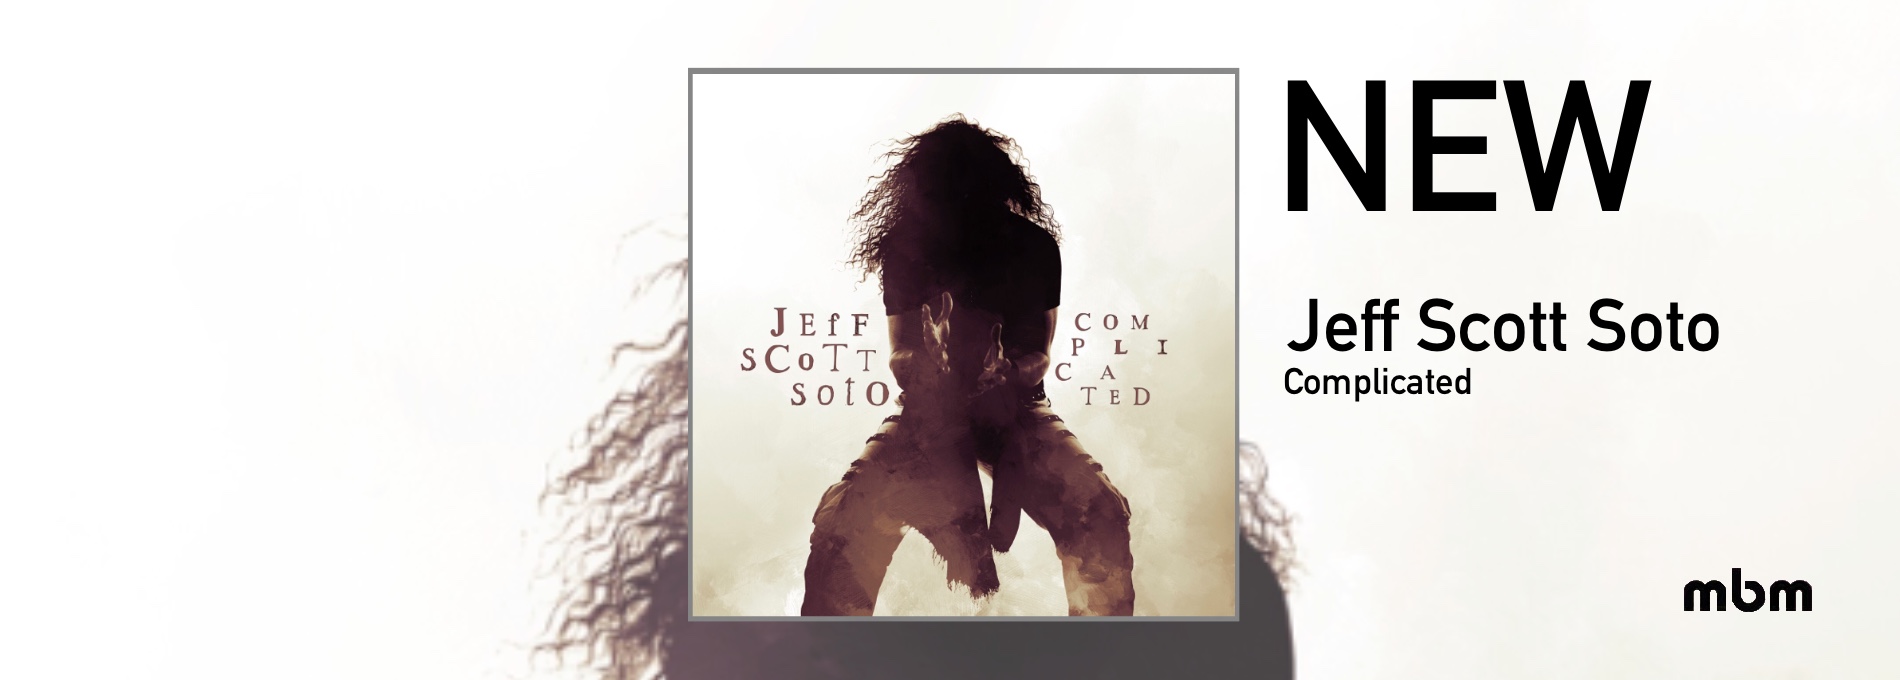 JEFF SCOTT SOTO - Complicated